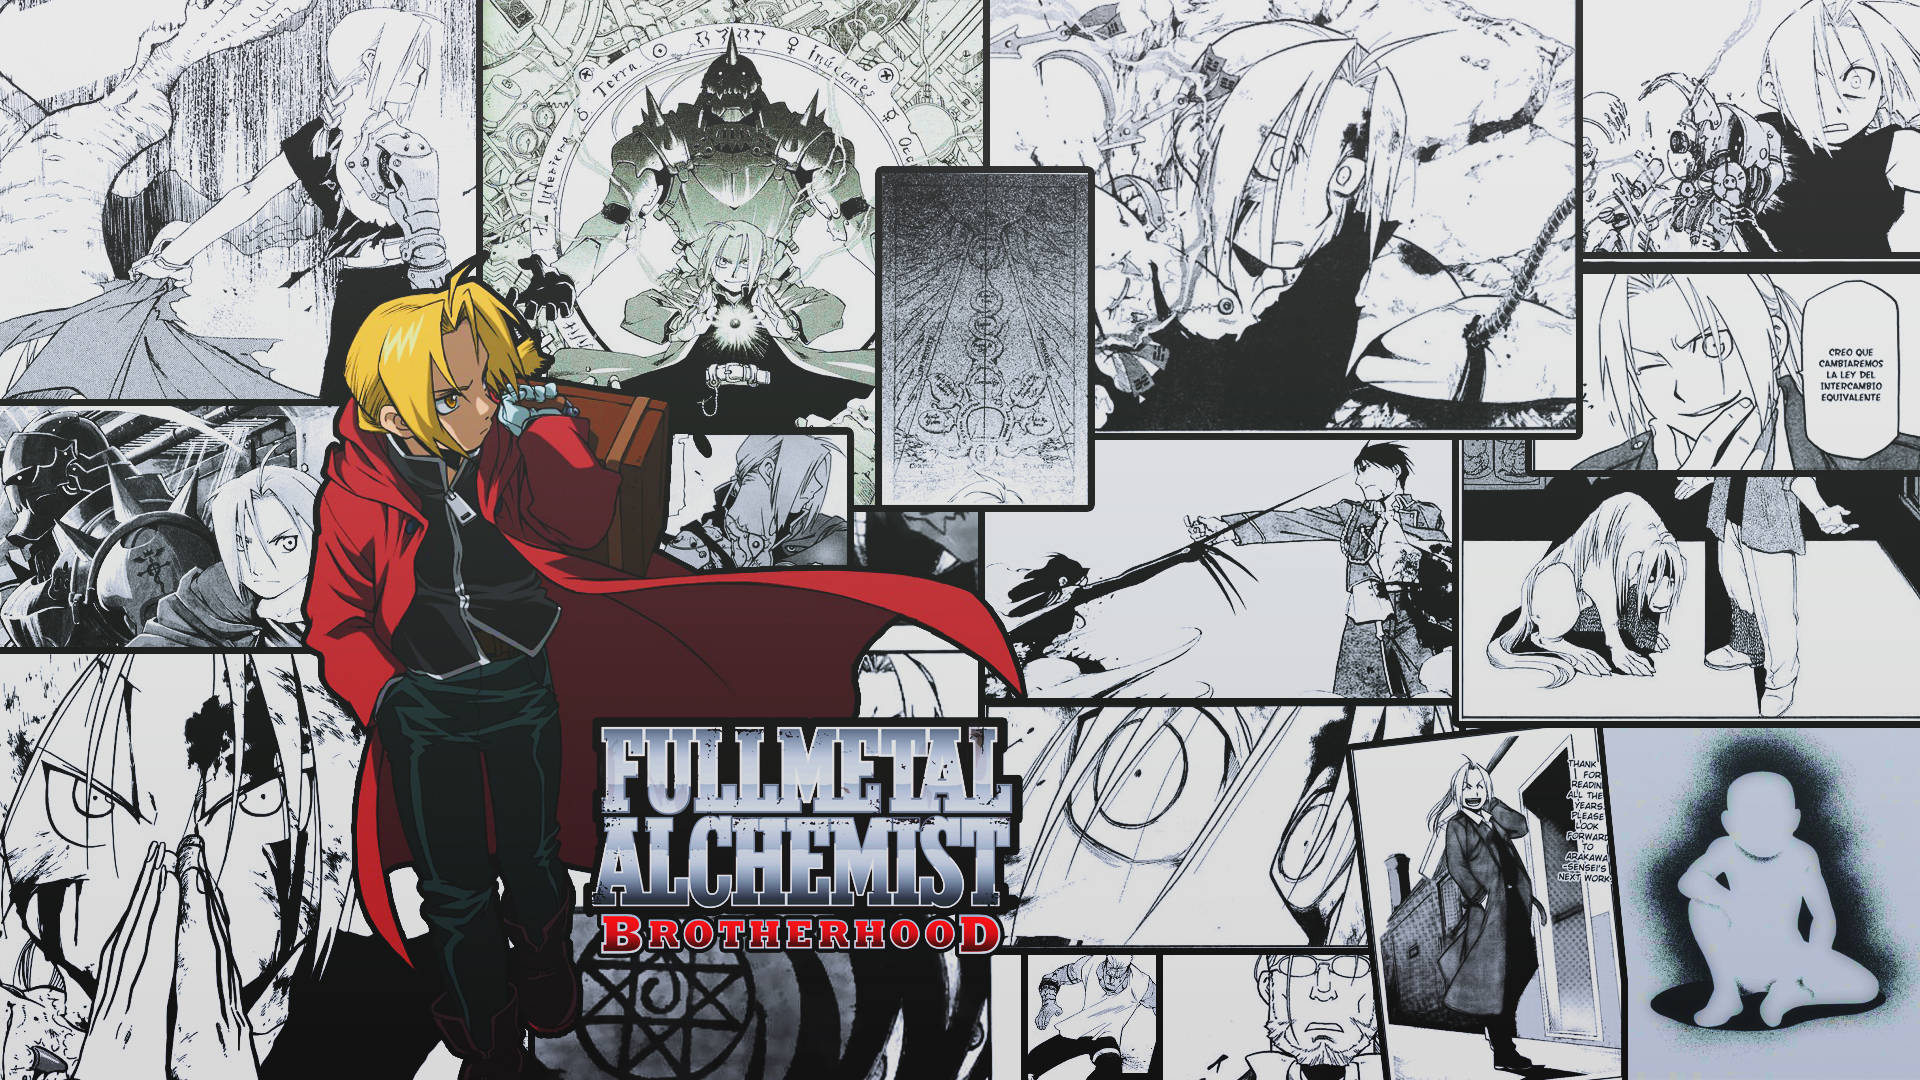 1920X1080 Fullmetal Alchemist Brotherhood Wallpaper and Background